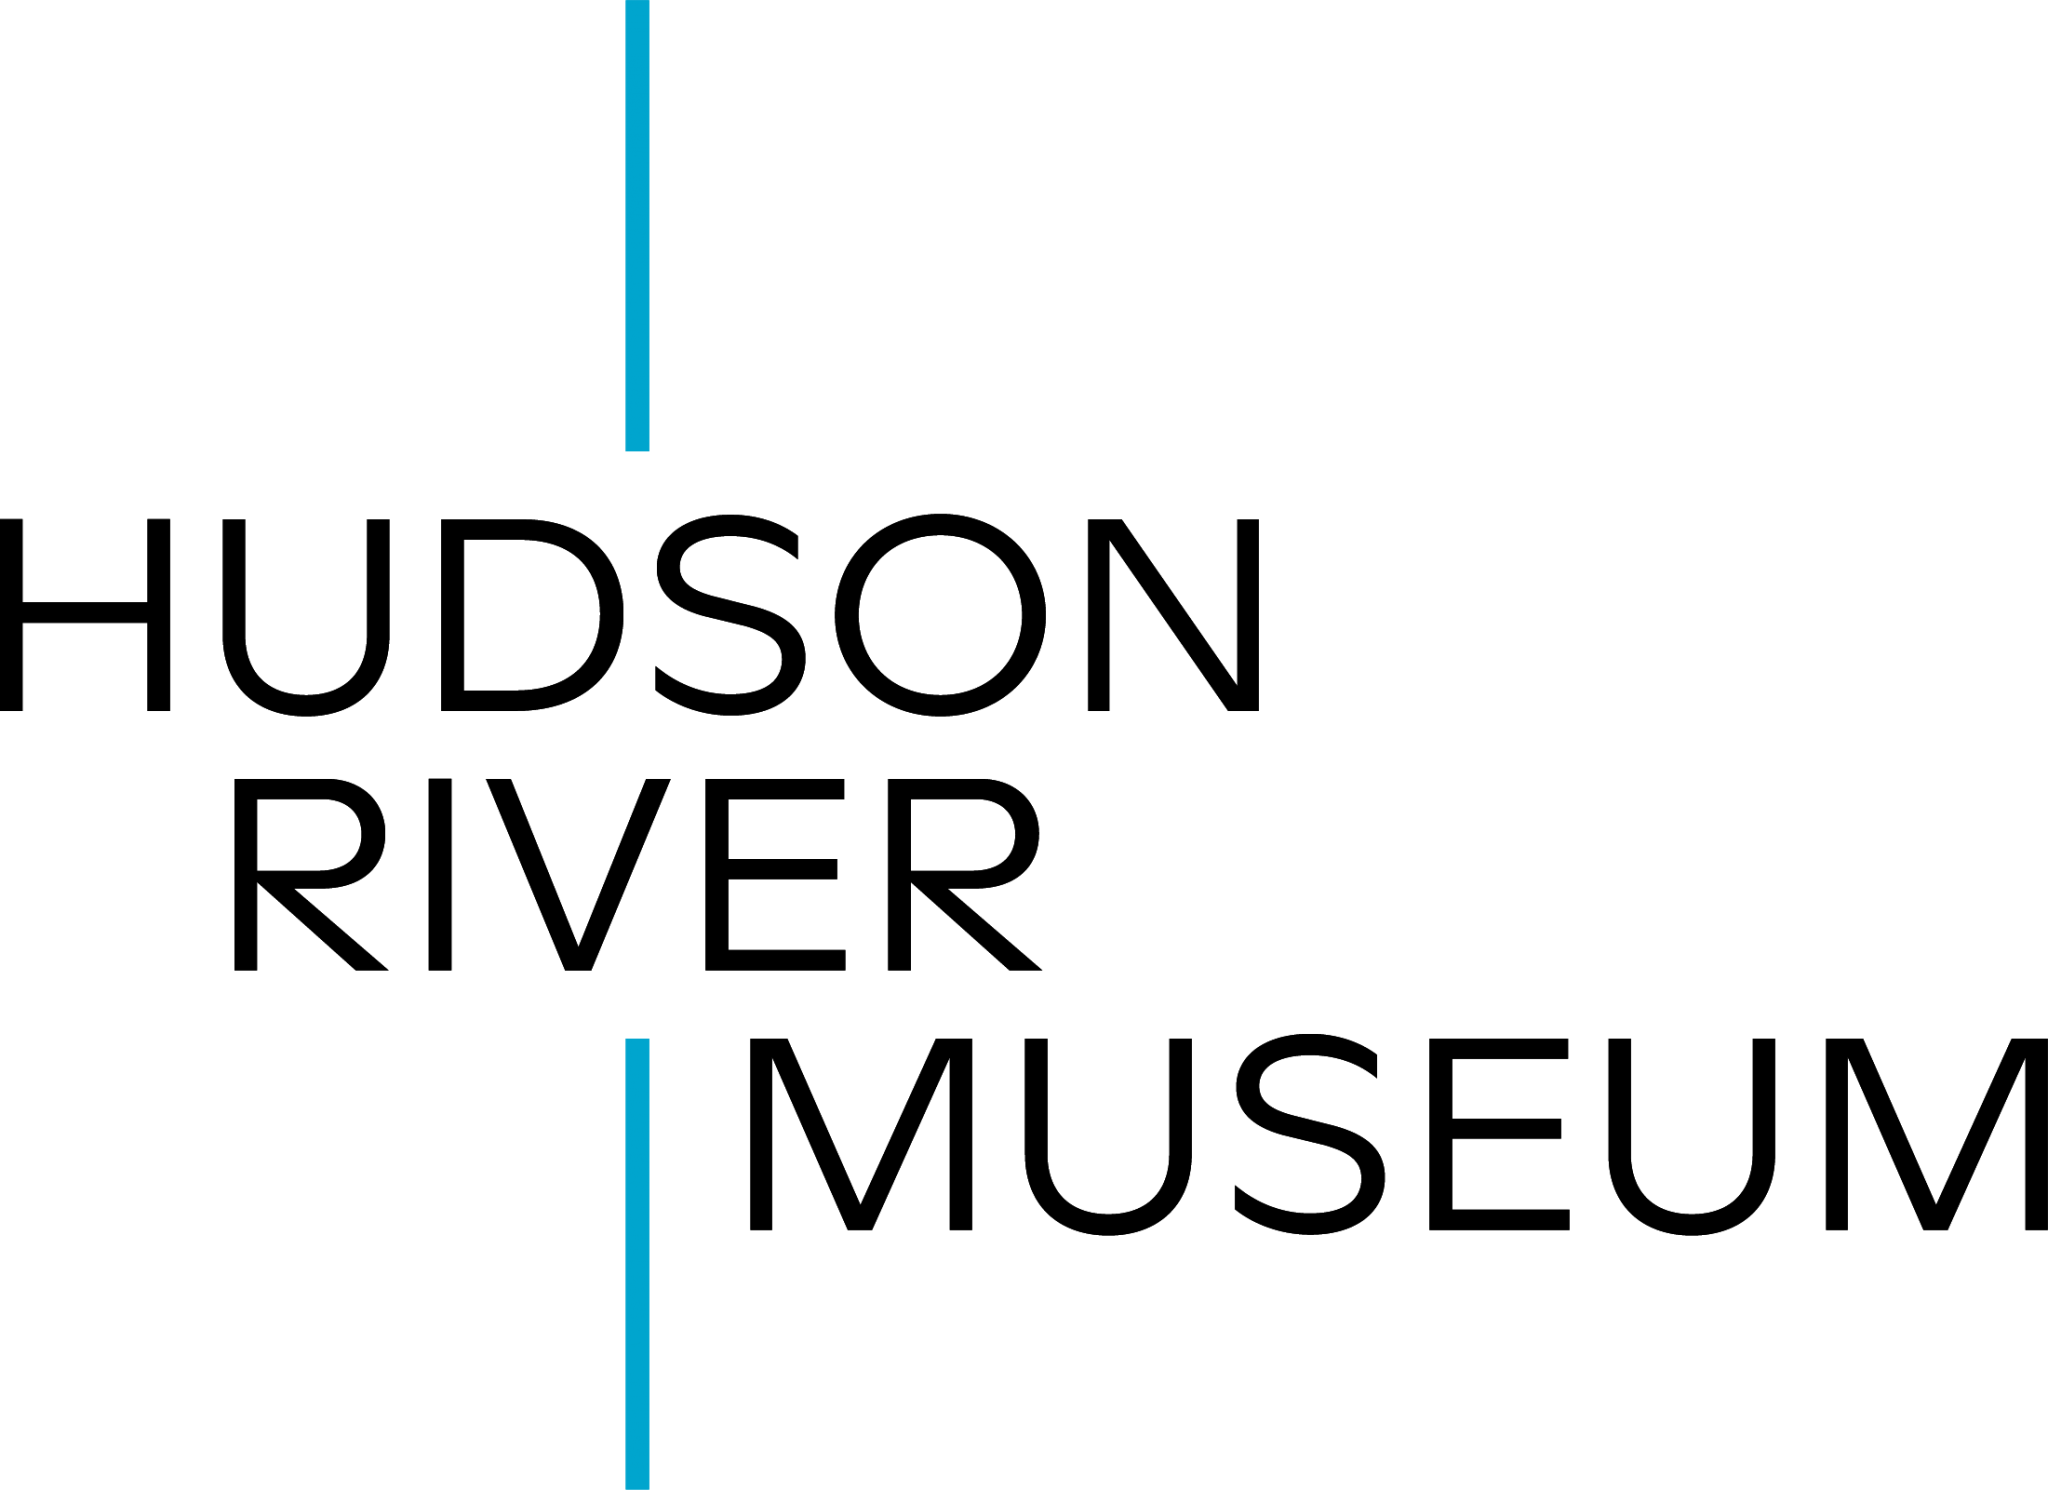 Hudson River Museum logo